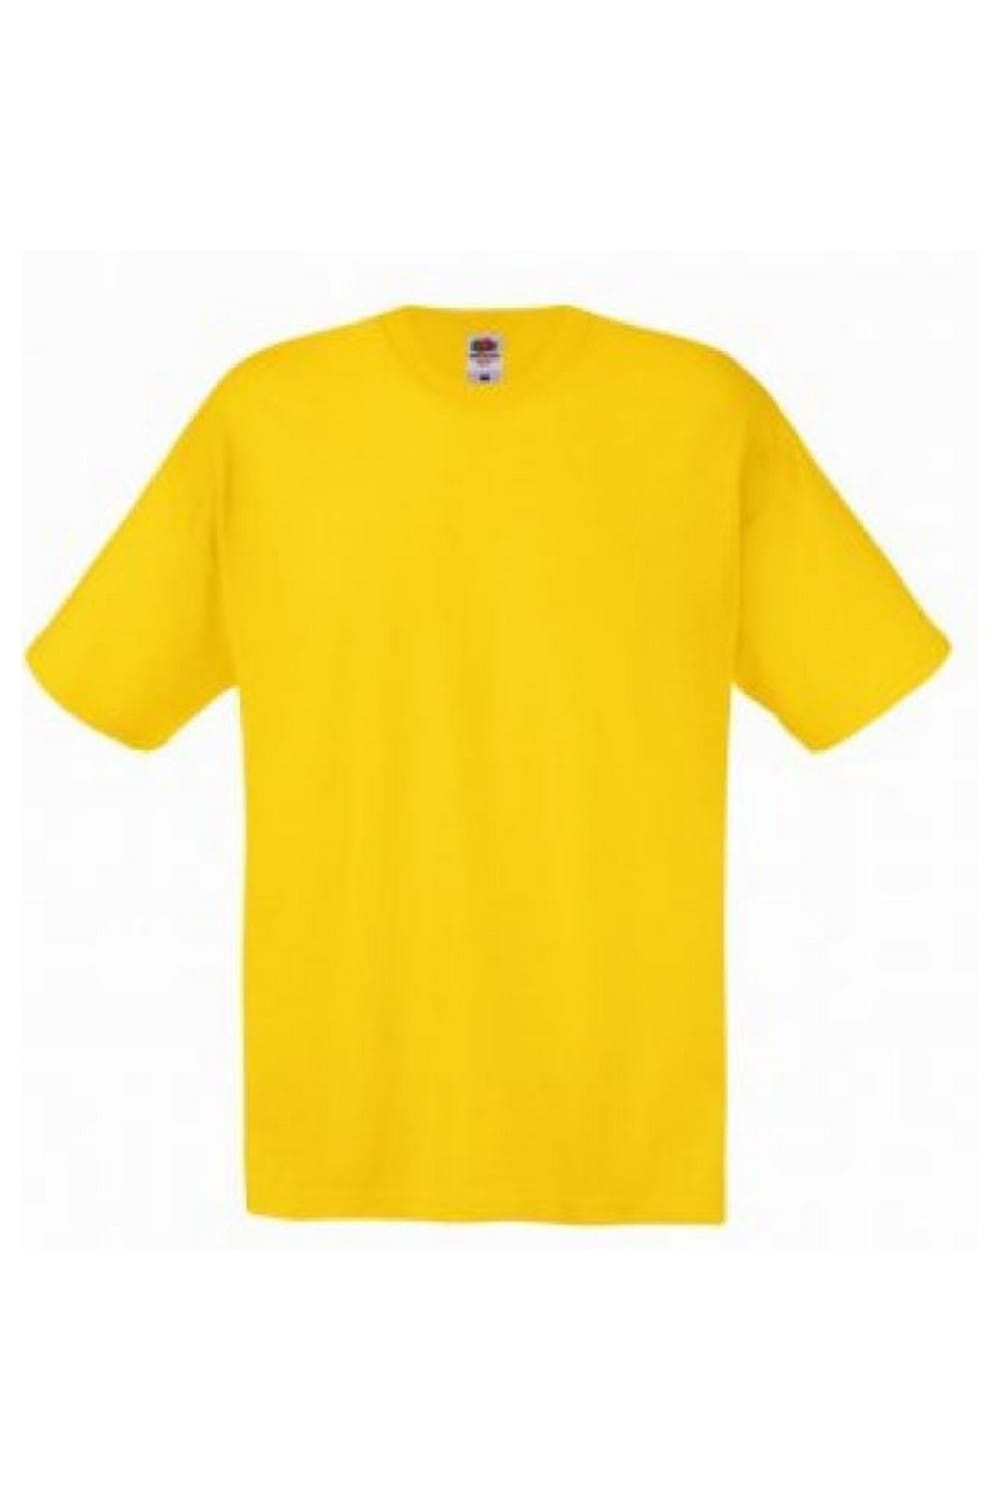 Fruit Of The Loom Mens Original Short Sleeve T-Shirt (Yellow)